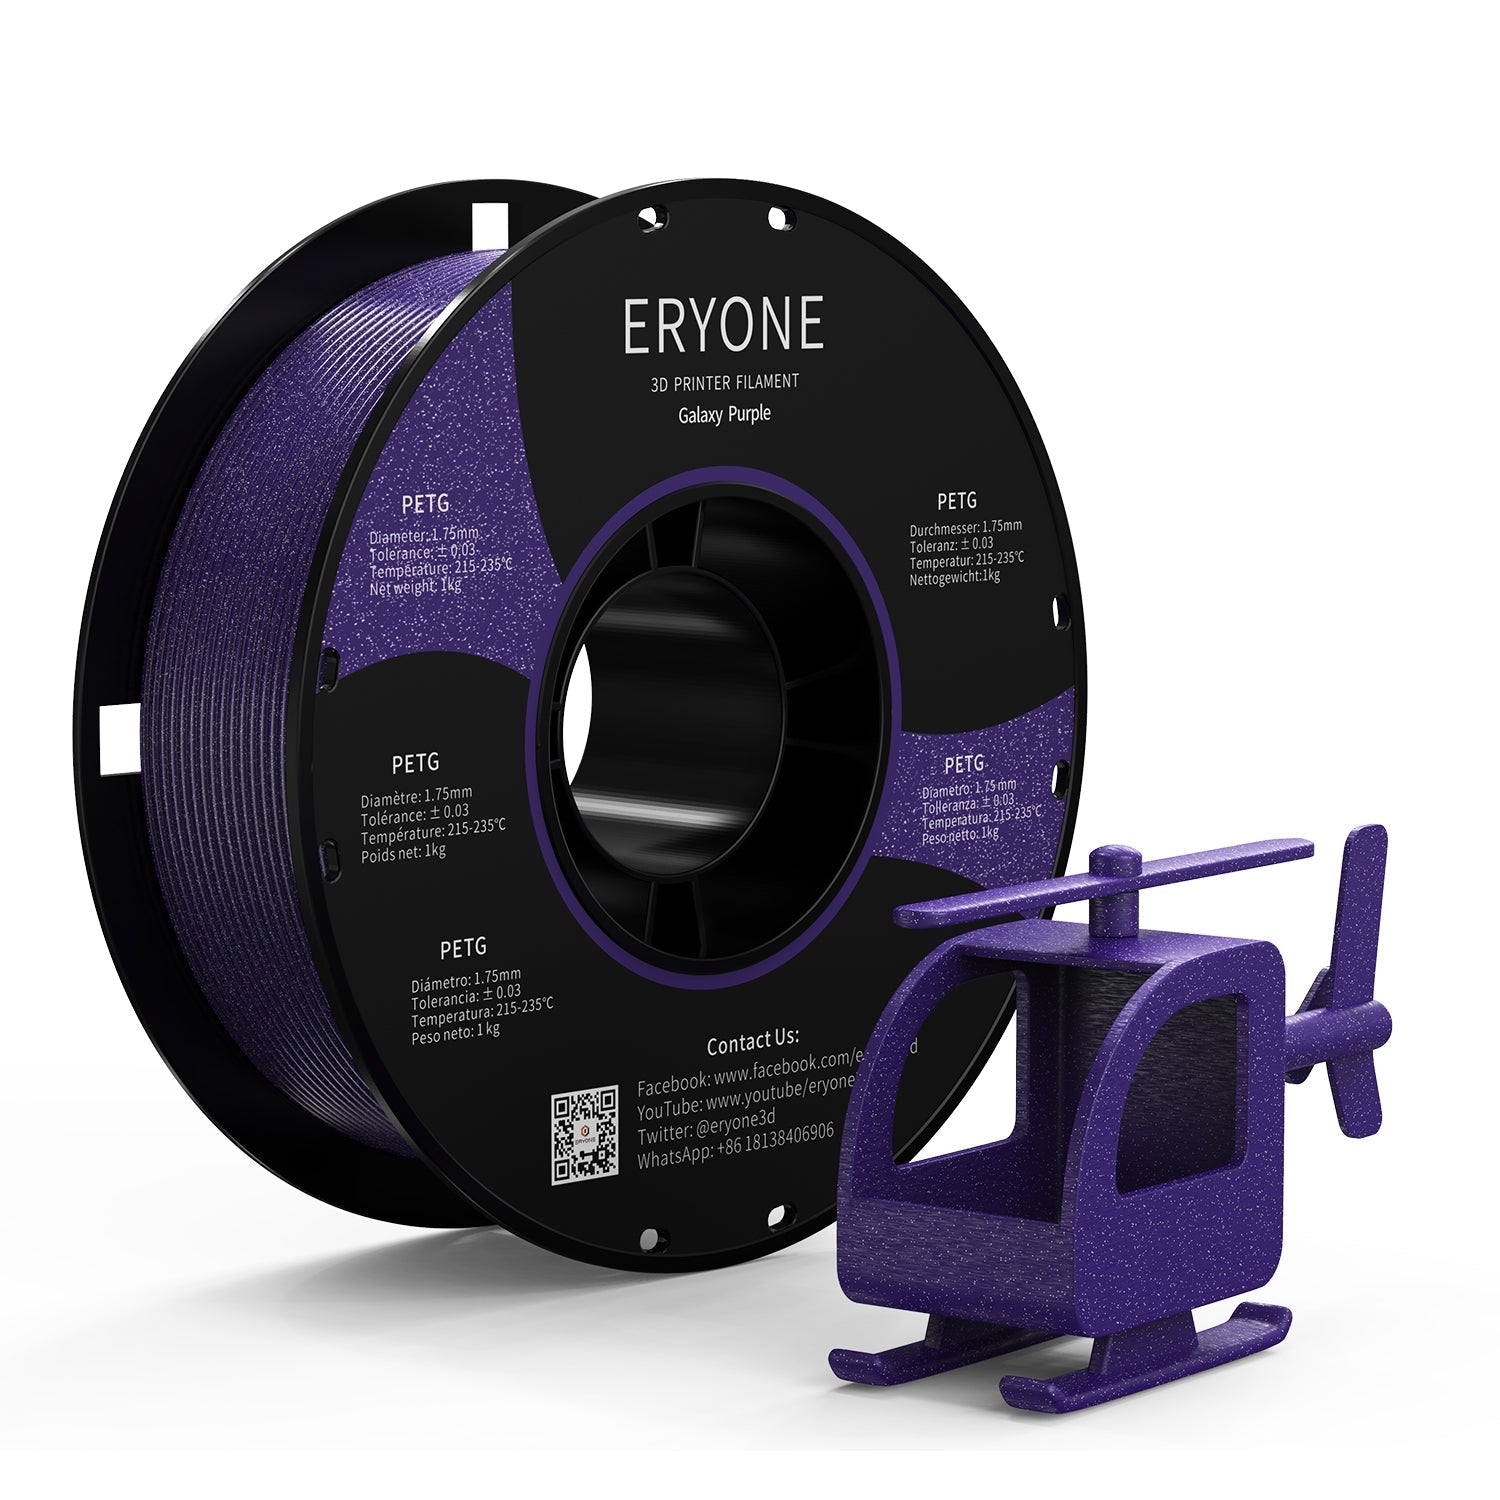 Pre-sale ERYONE Galaxy PETG 3D Printer Filament 1.75mm, Dimensional Accuracy +/- 0.05 mm, 1kg (2.2LBS) / Spool